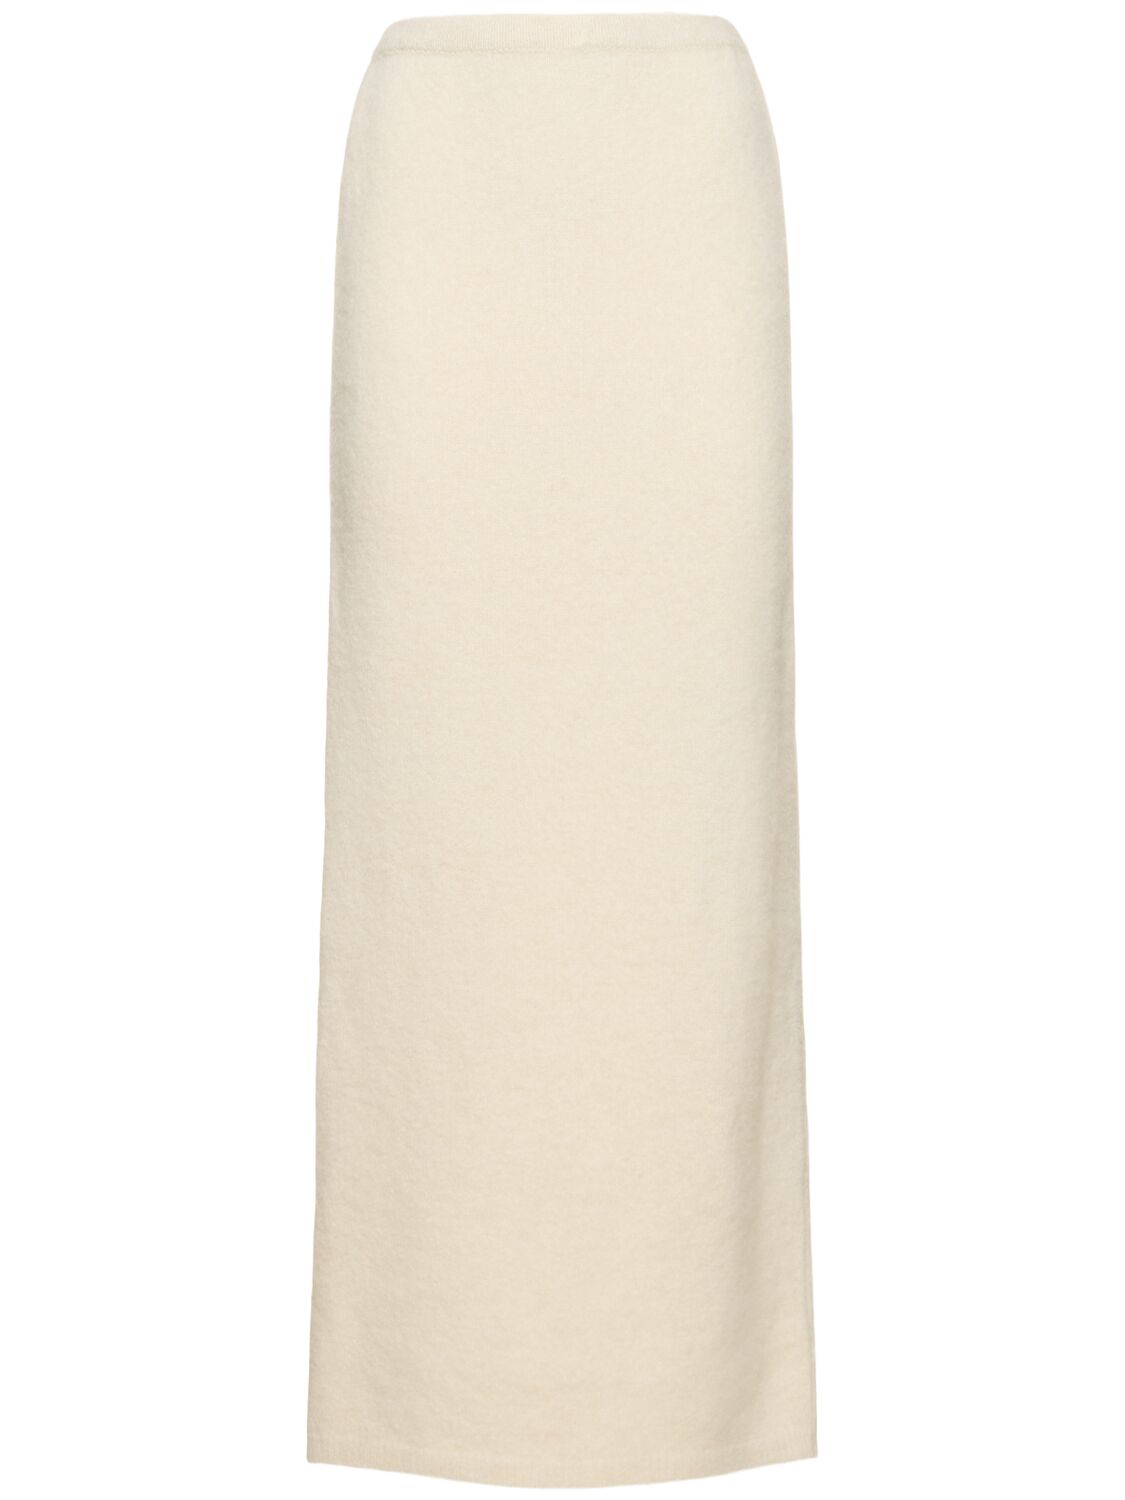 Image of Alpaca Blend Knit Skirt